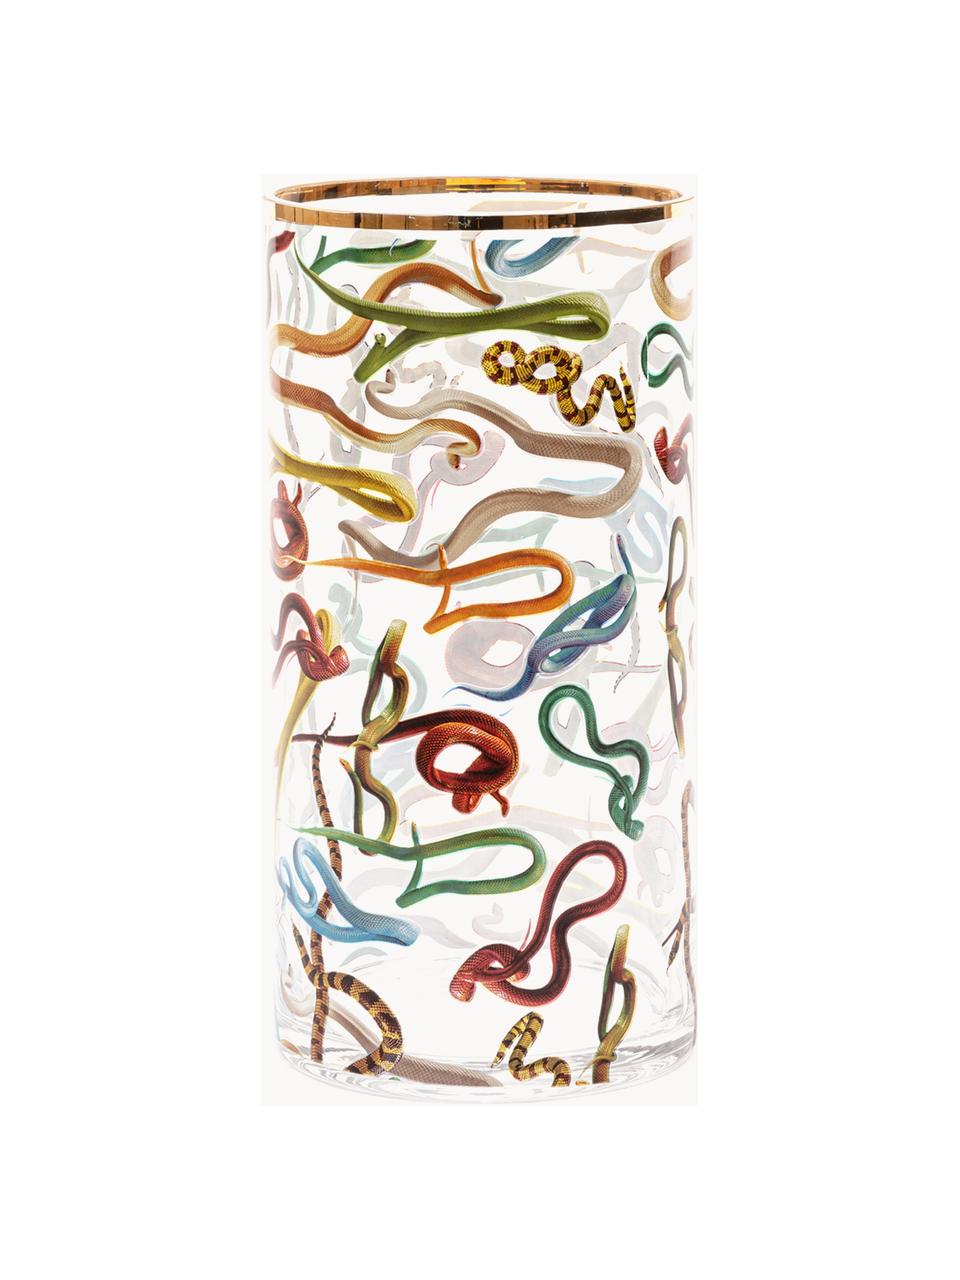 Glazen vaas Snakes, H 30 cm, Vaas: glas, Rand: goudkleurig, Slangen, Ø 15 x H 30 cm